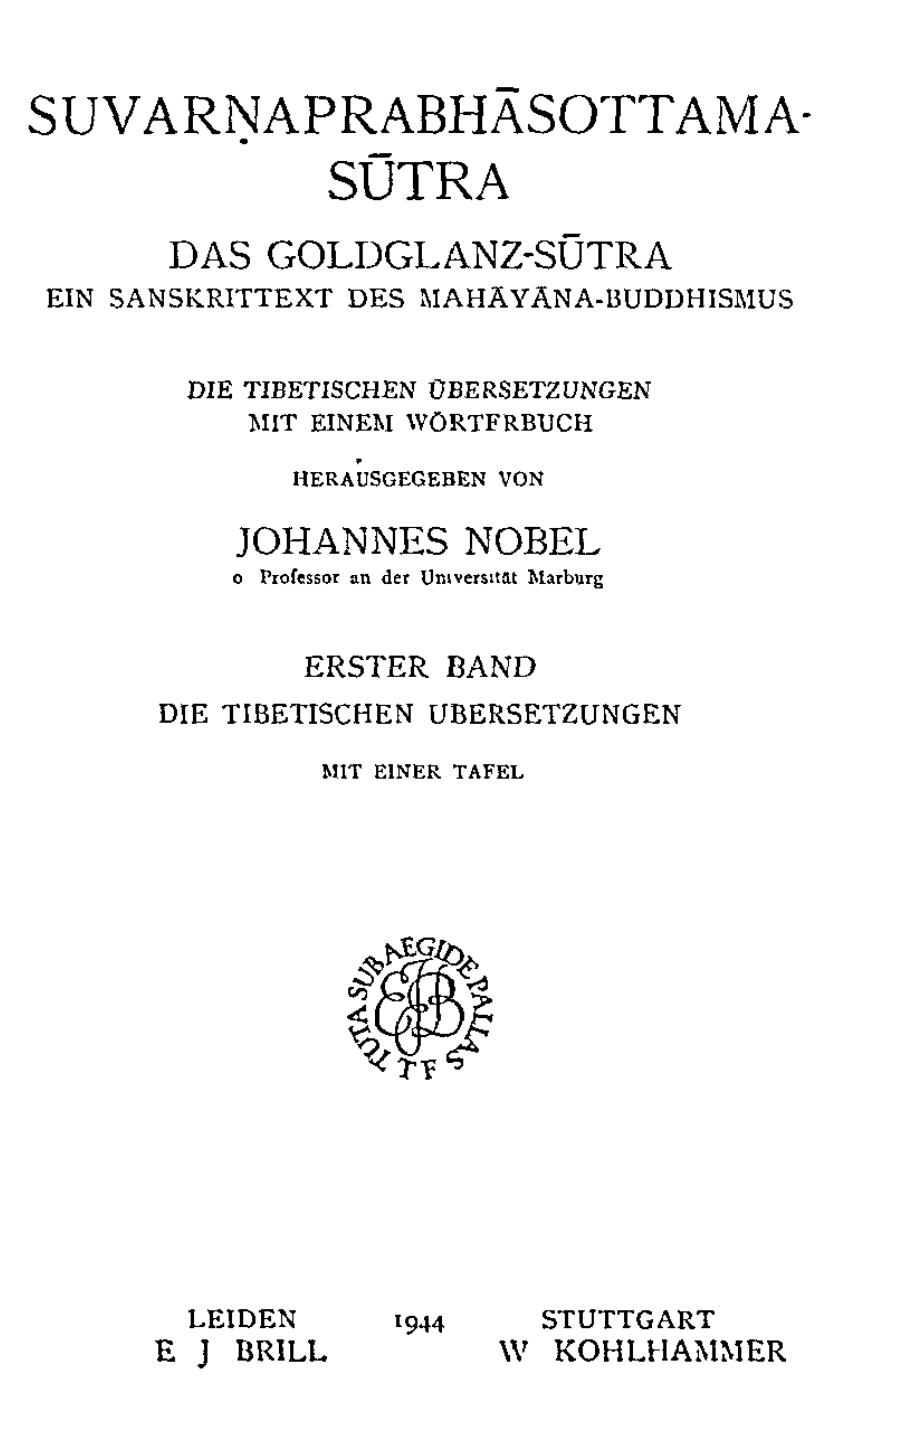 Suvarṇaprabhāsottama-sūtra Das Goldglanz-Sūtra Nobel 1944-front.jpg